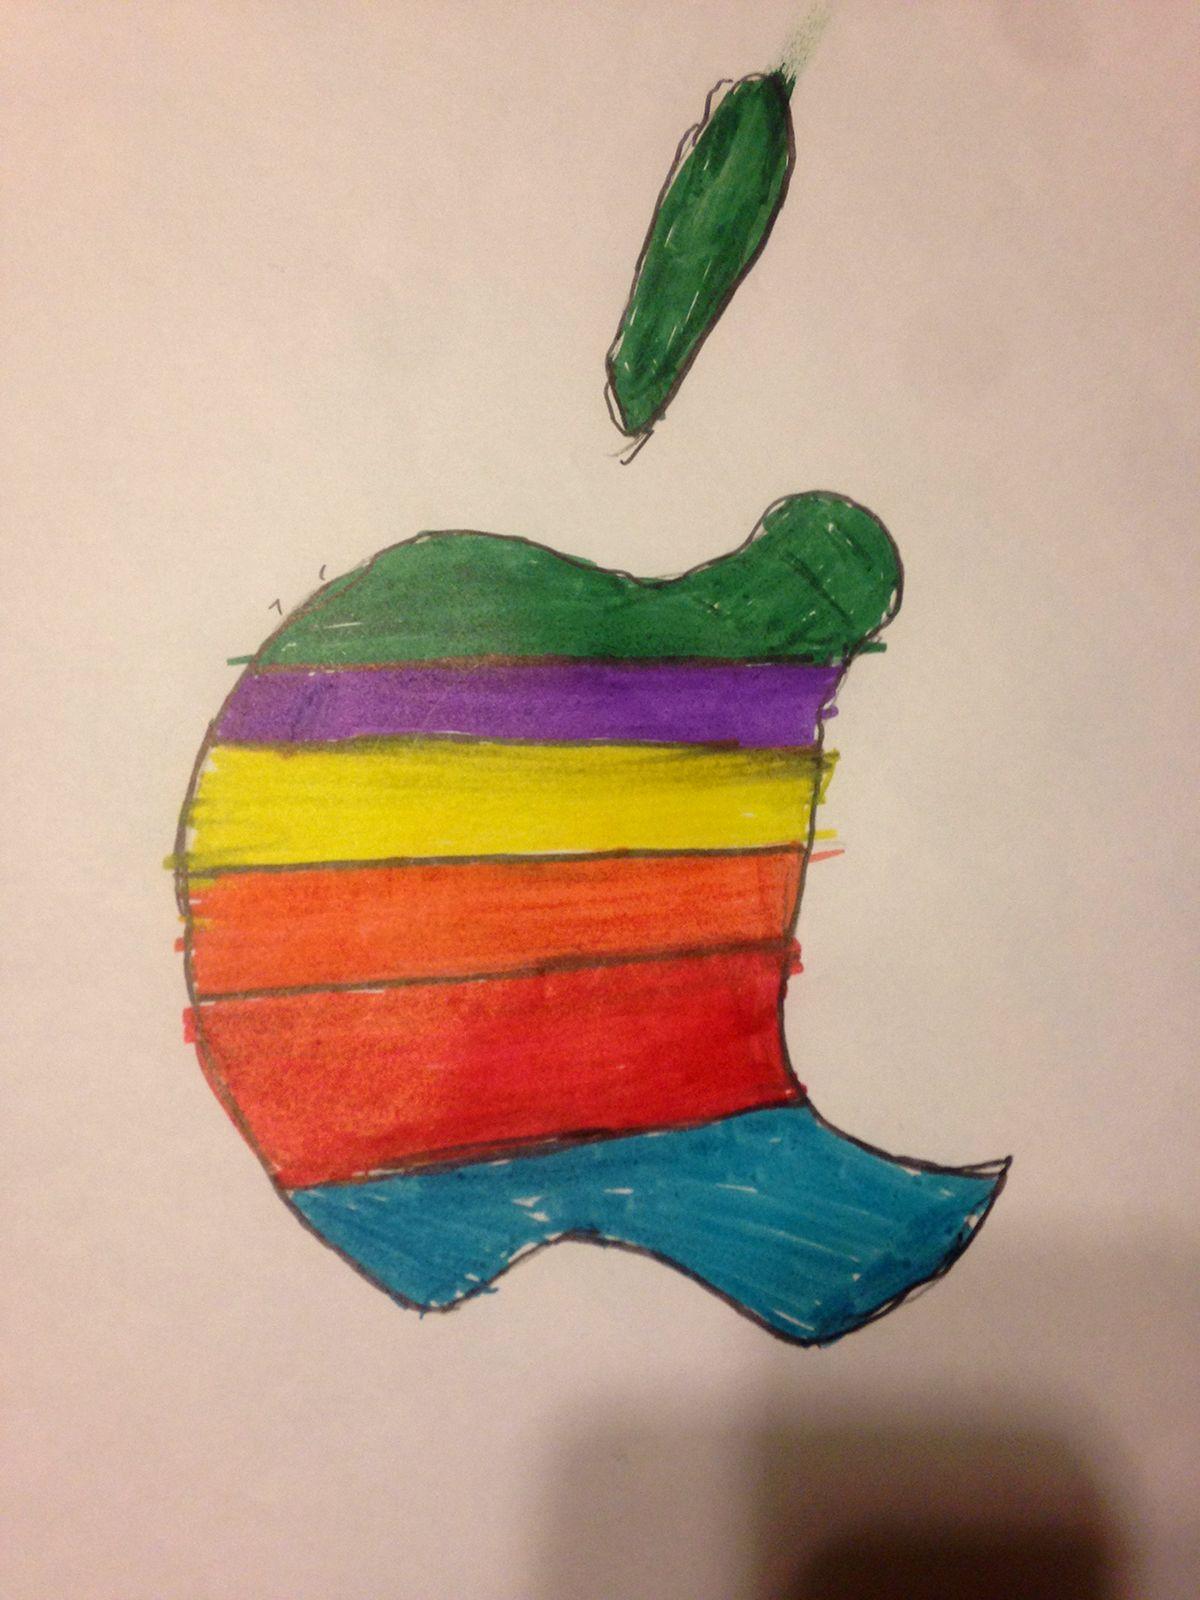 Apple Old Logo - old apple logo interprtitation on Behance